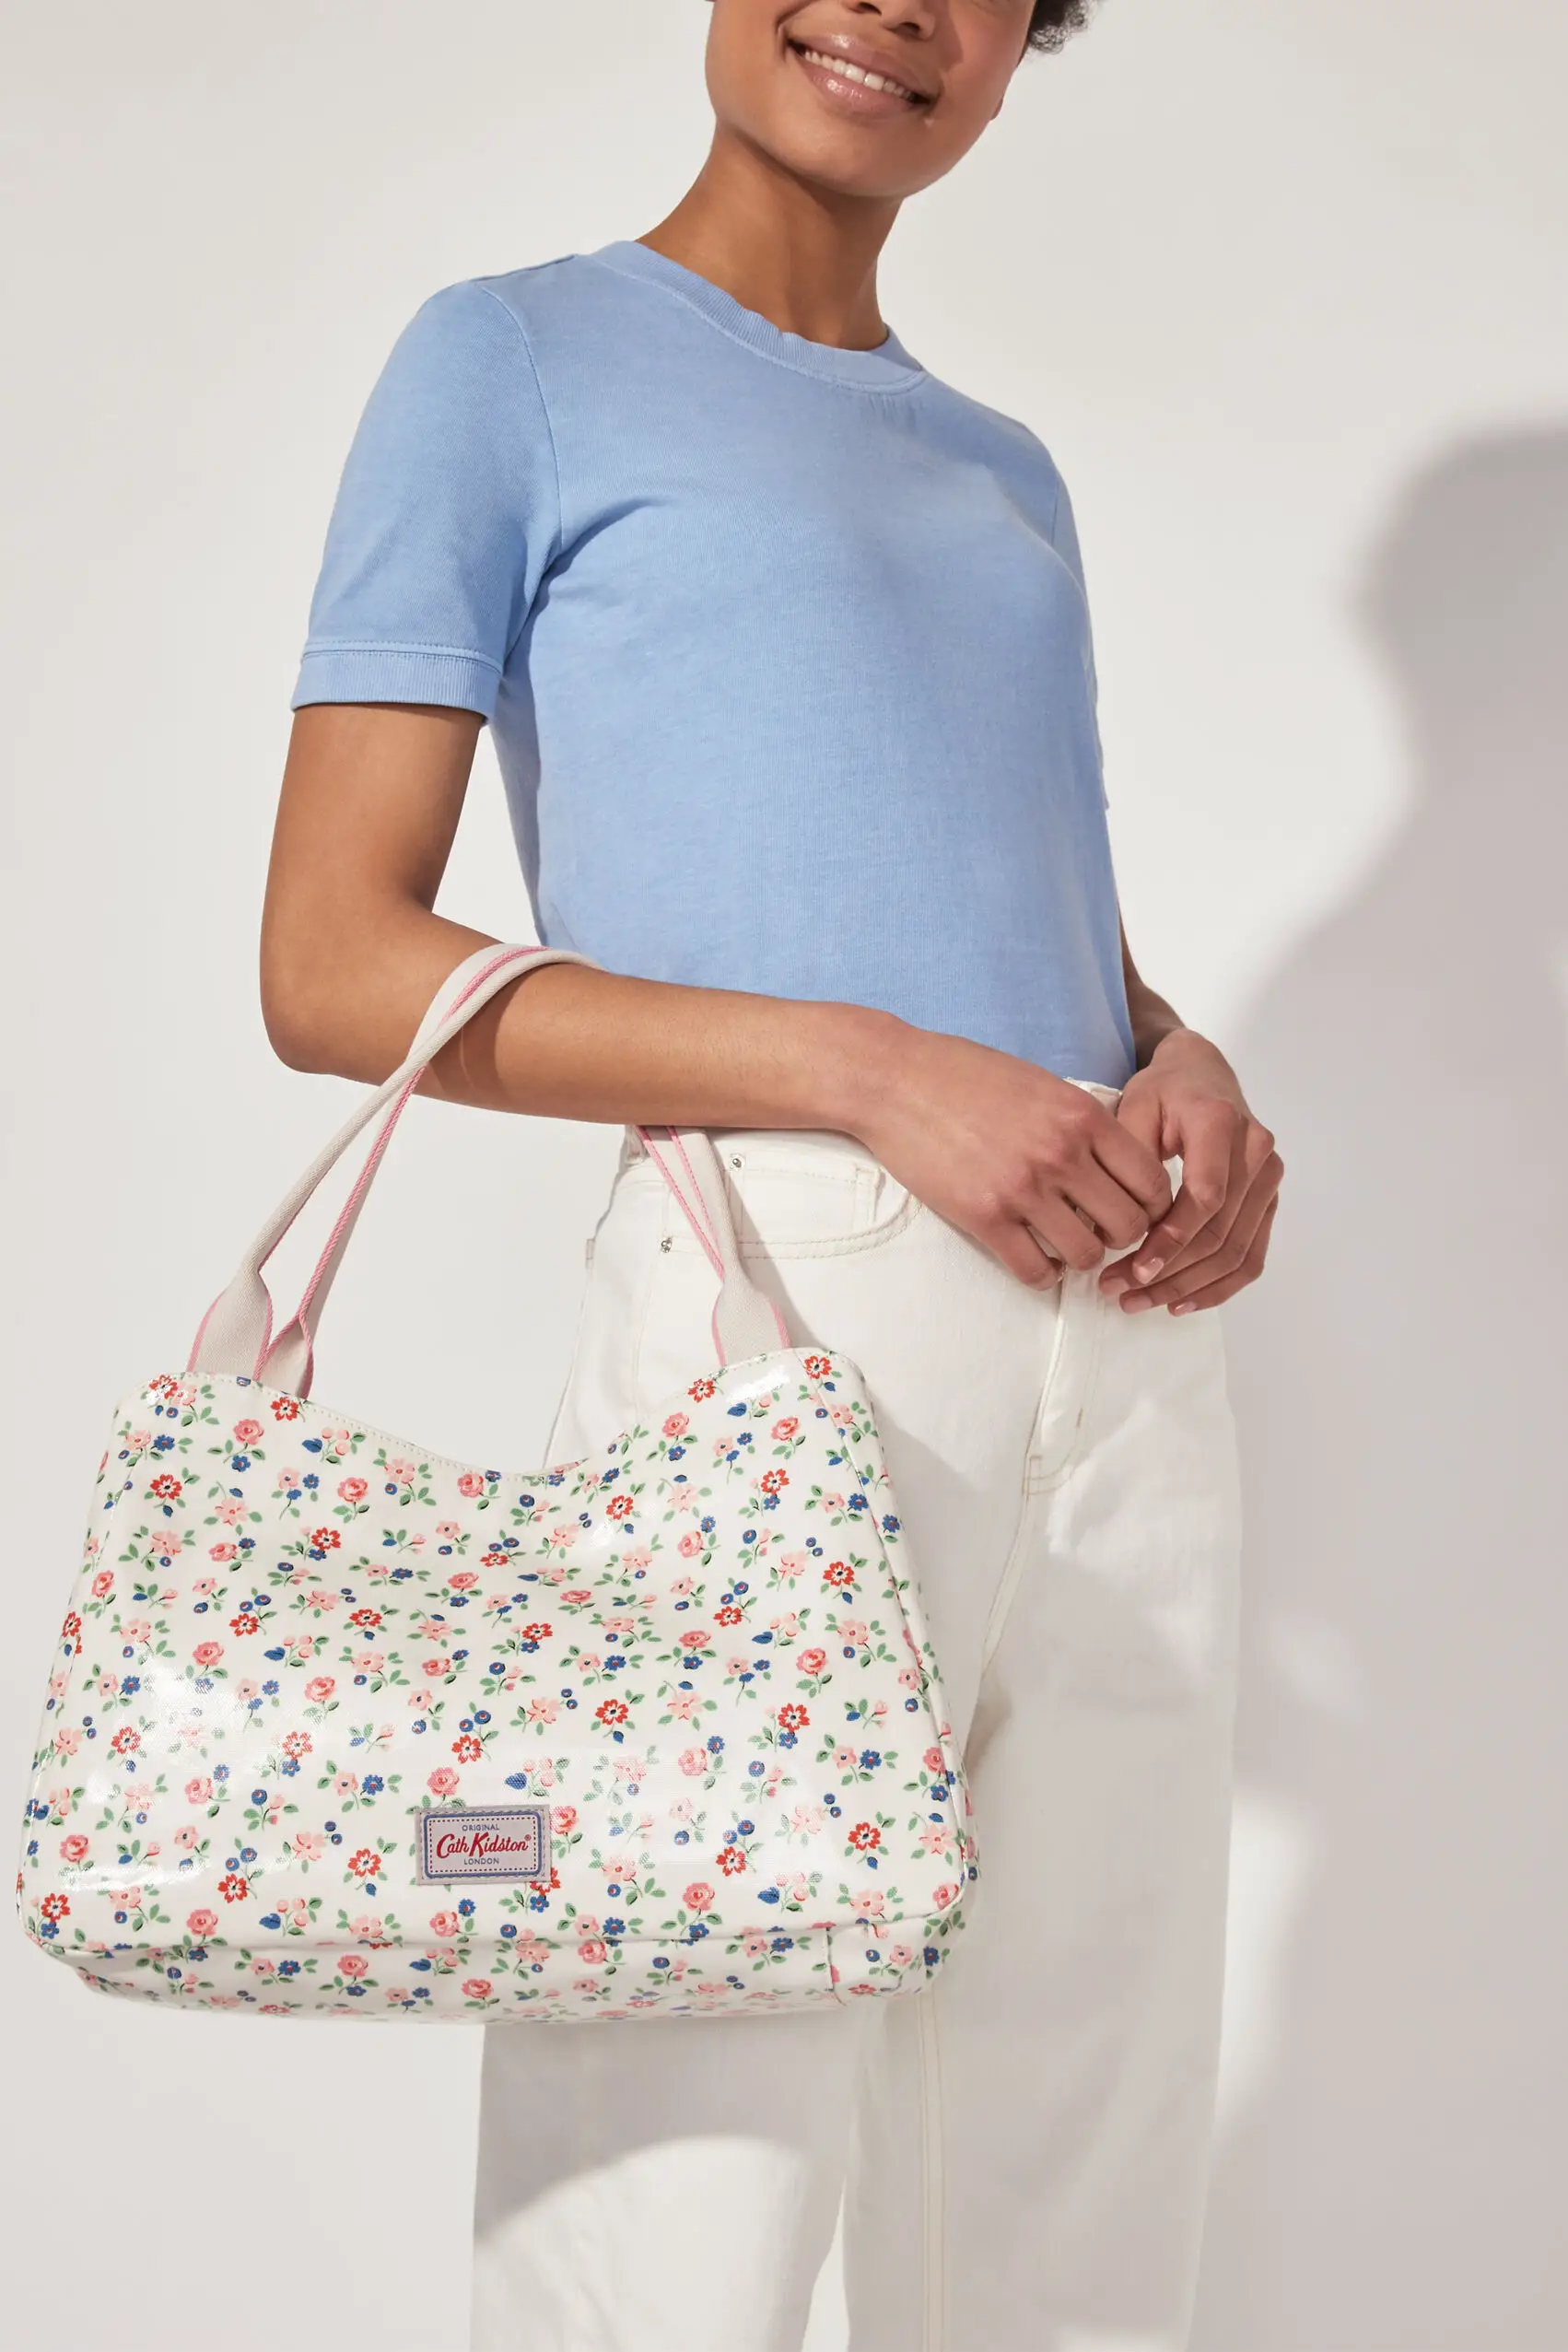 Cath kidson floral bag